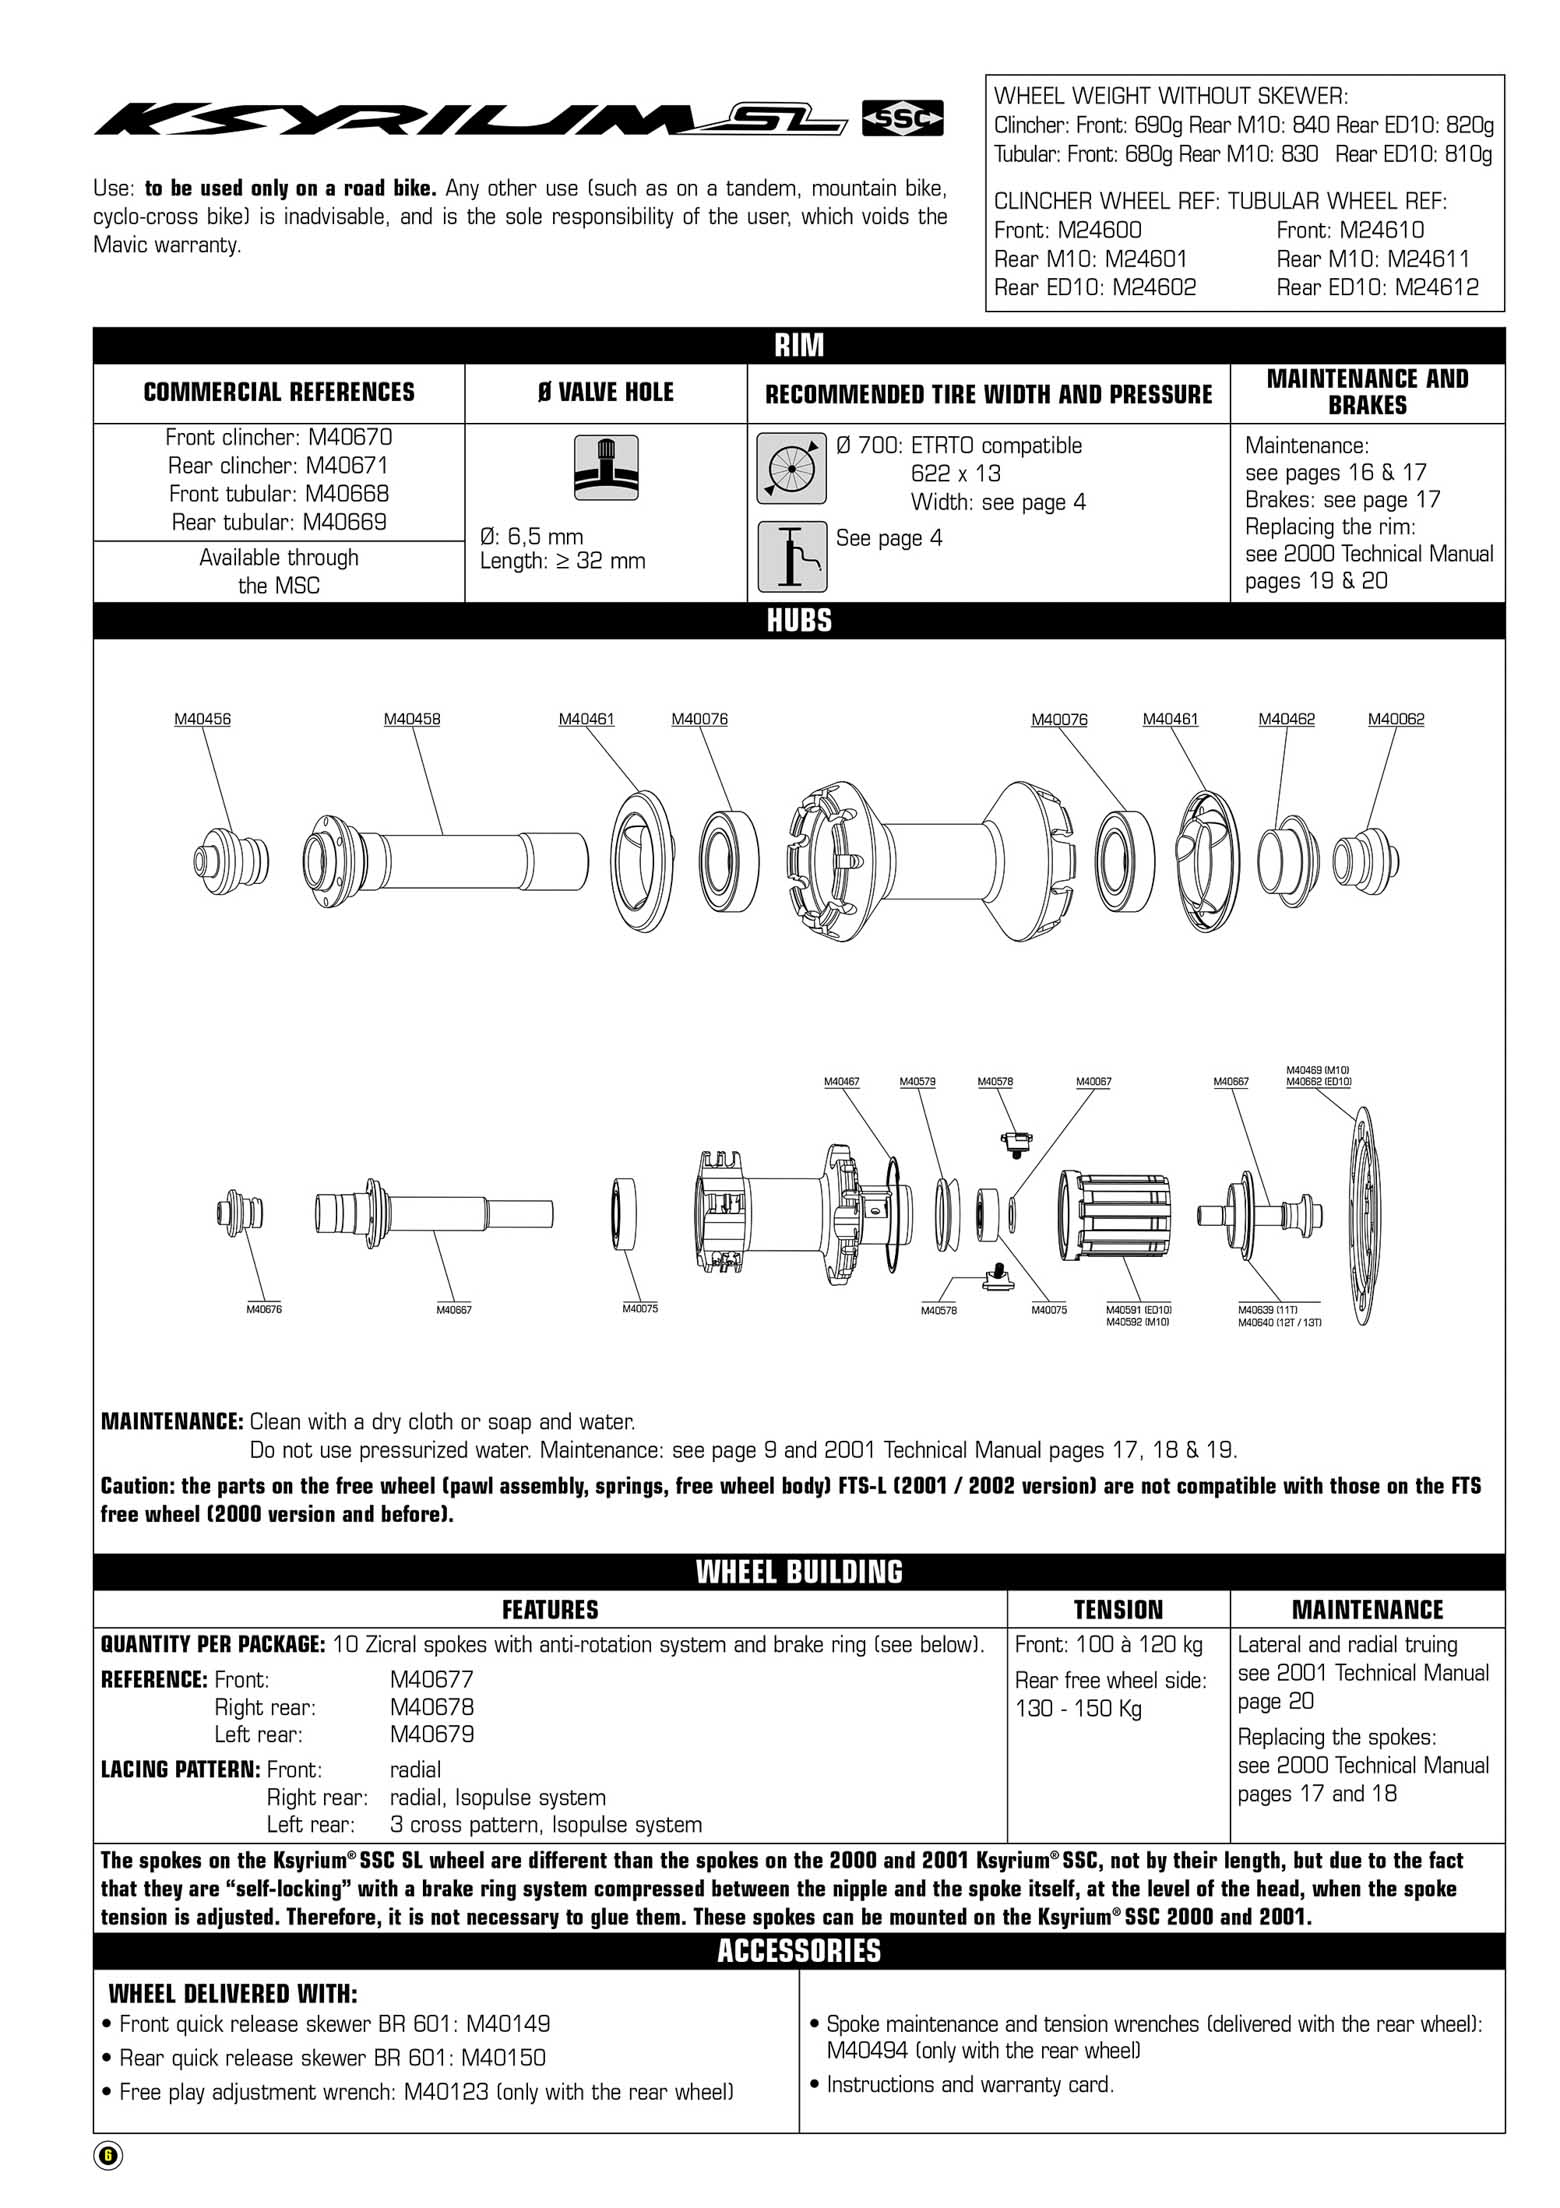 MAVIC - technical manual 02 page 006 main image